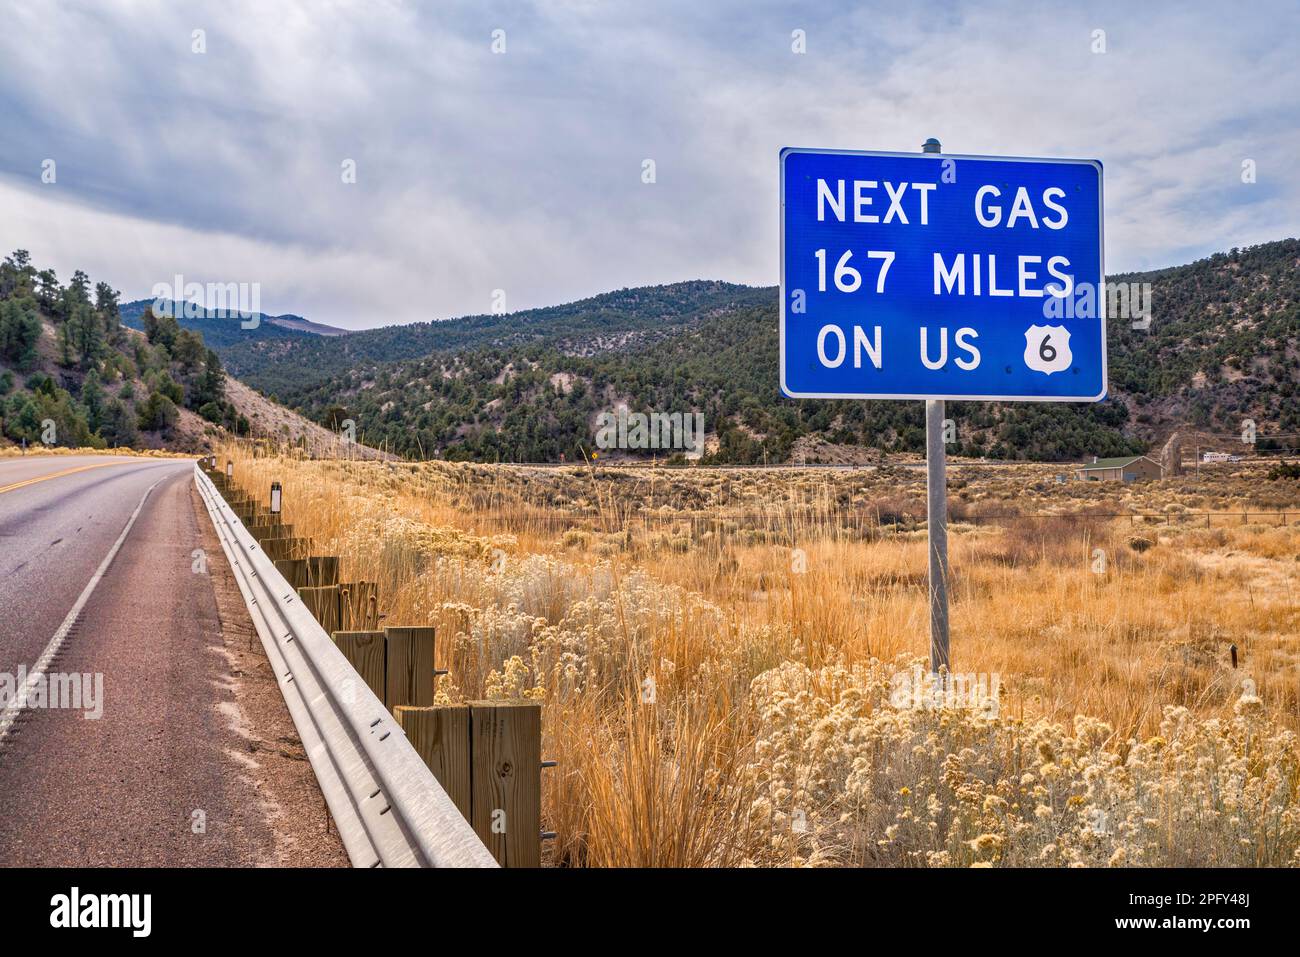 No gasoline available warning sign on Grand Army of the Republic Hwy (US 6), rabbitbush, Murry Canyon, Egan Range, near Ely, Nevada, USA Stock Photo